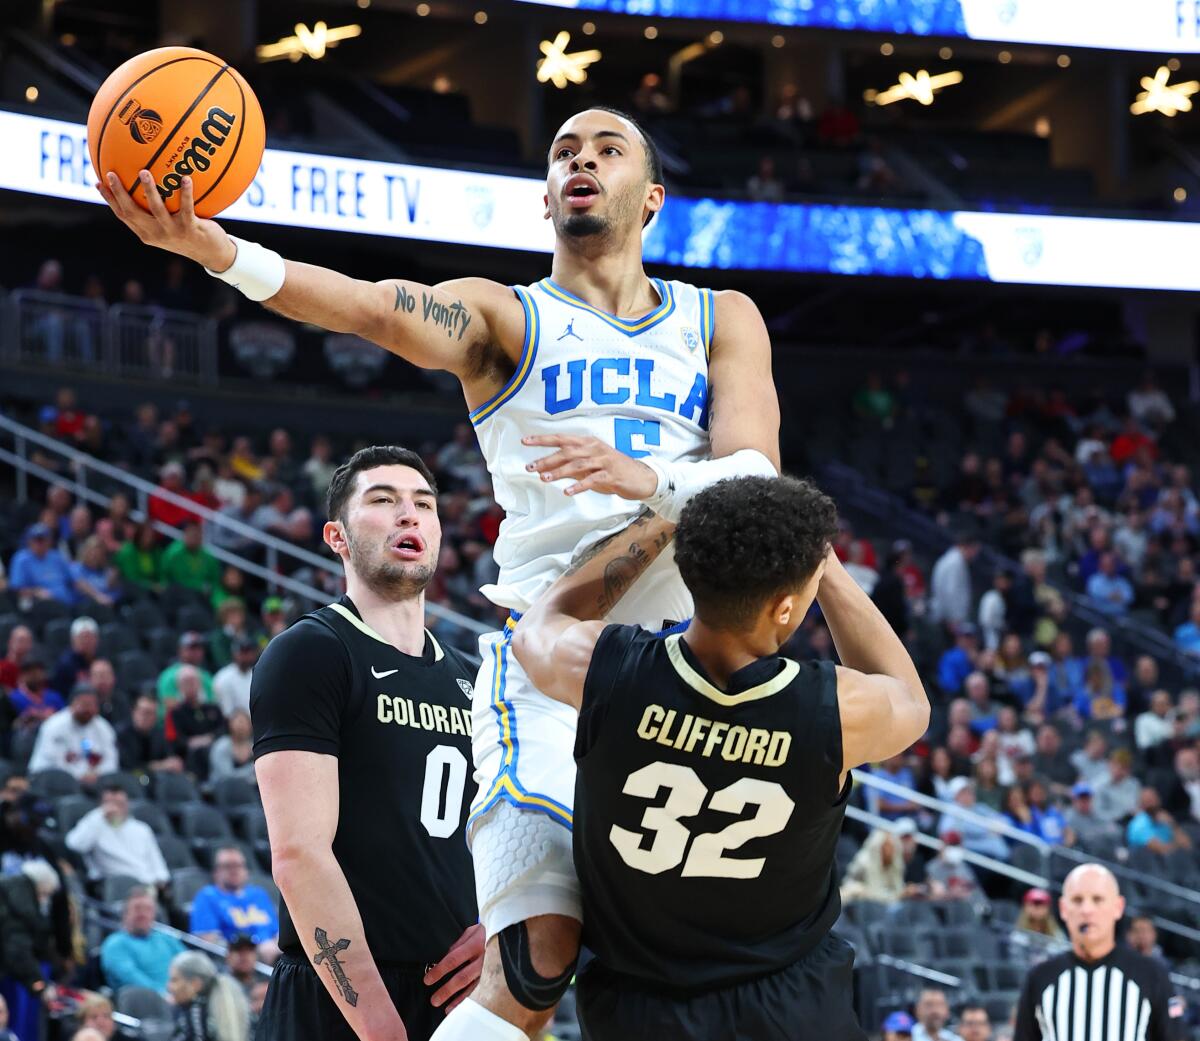 UCLA guard Amari Bailey drives to the basket over Colorado's Nique Clifford.